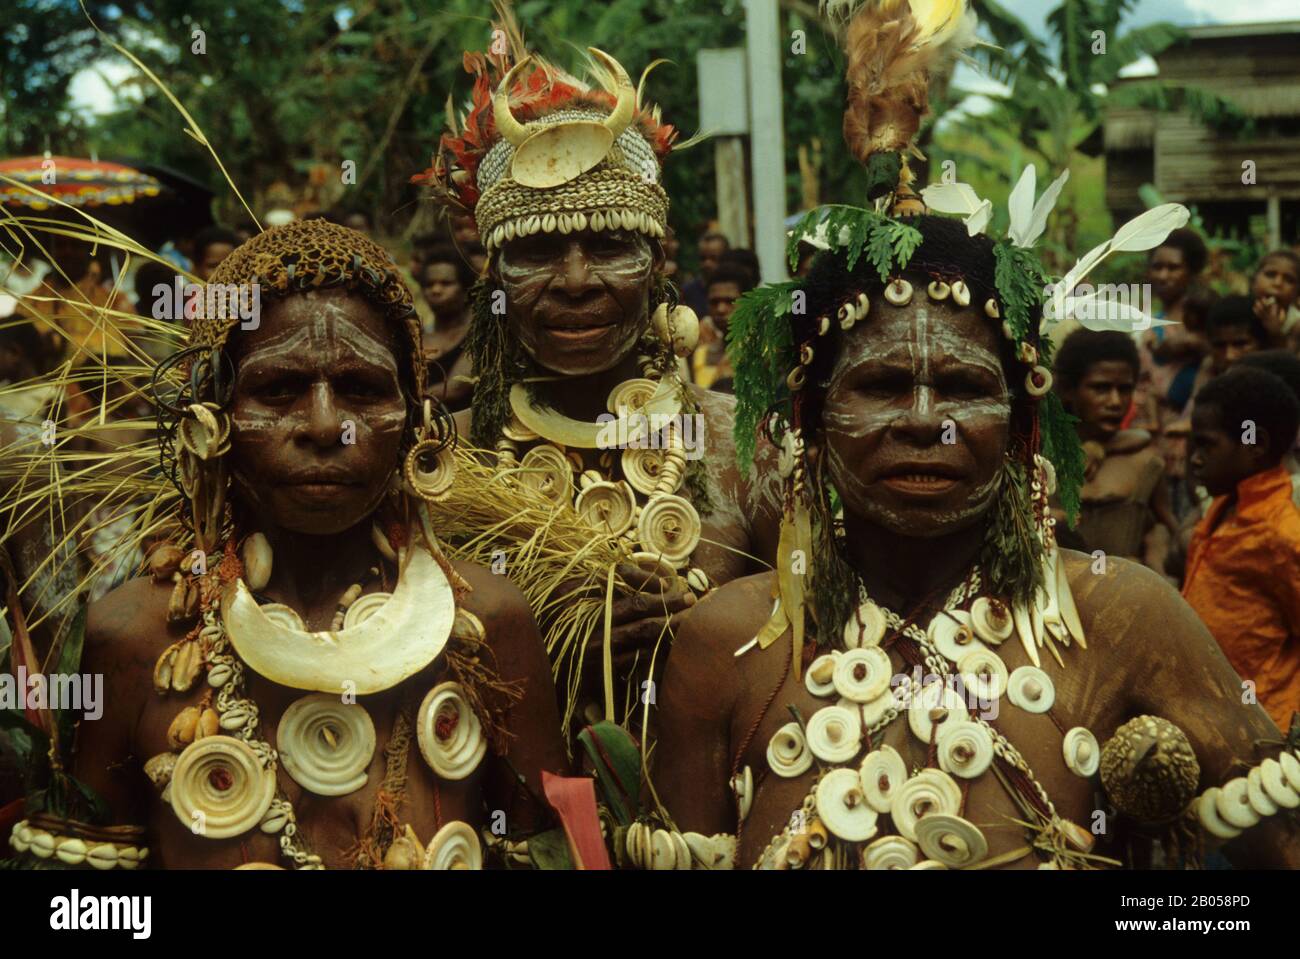 PAPUA NEW GUINEA, SEPIK RIVER, WOMEN IN TRADITIONAL DRESS Stock Photo